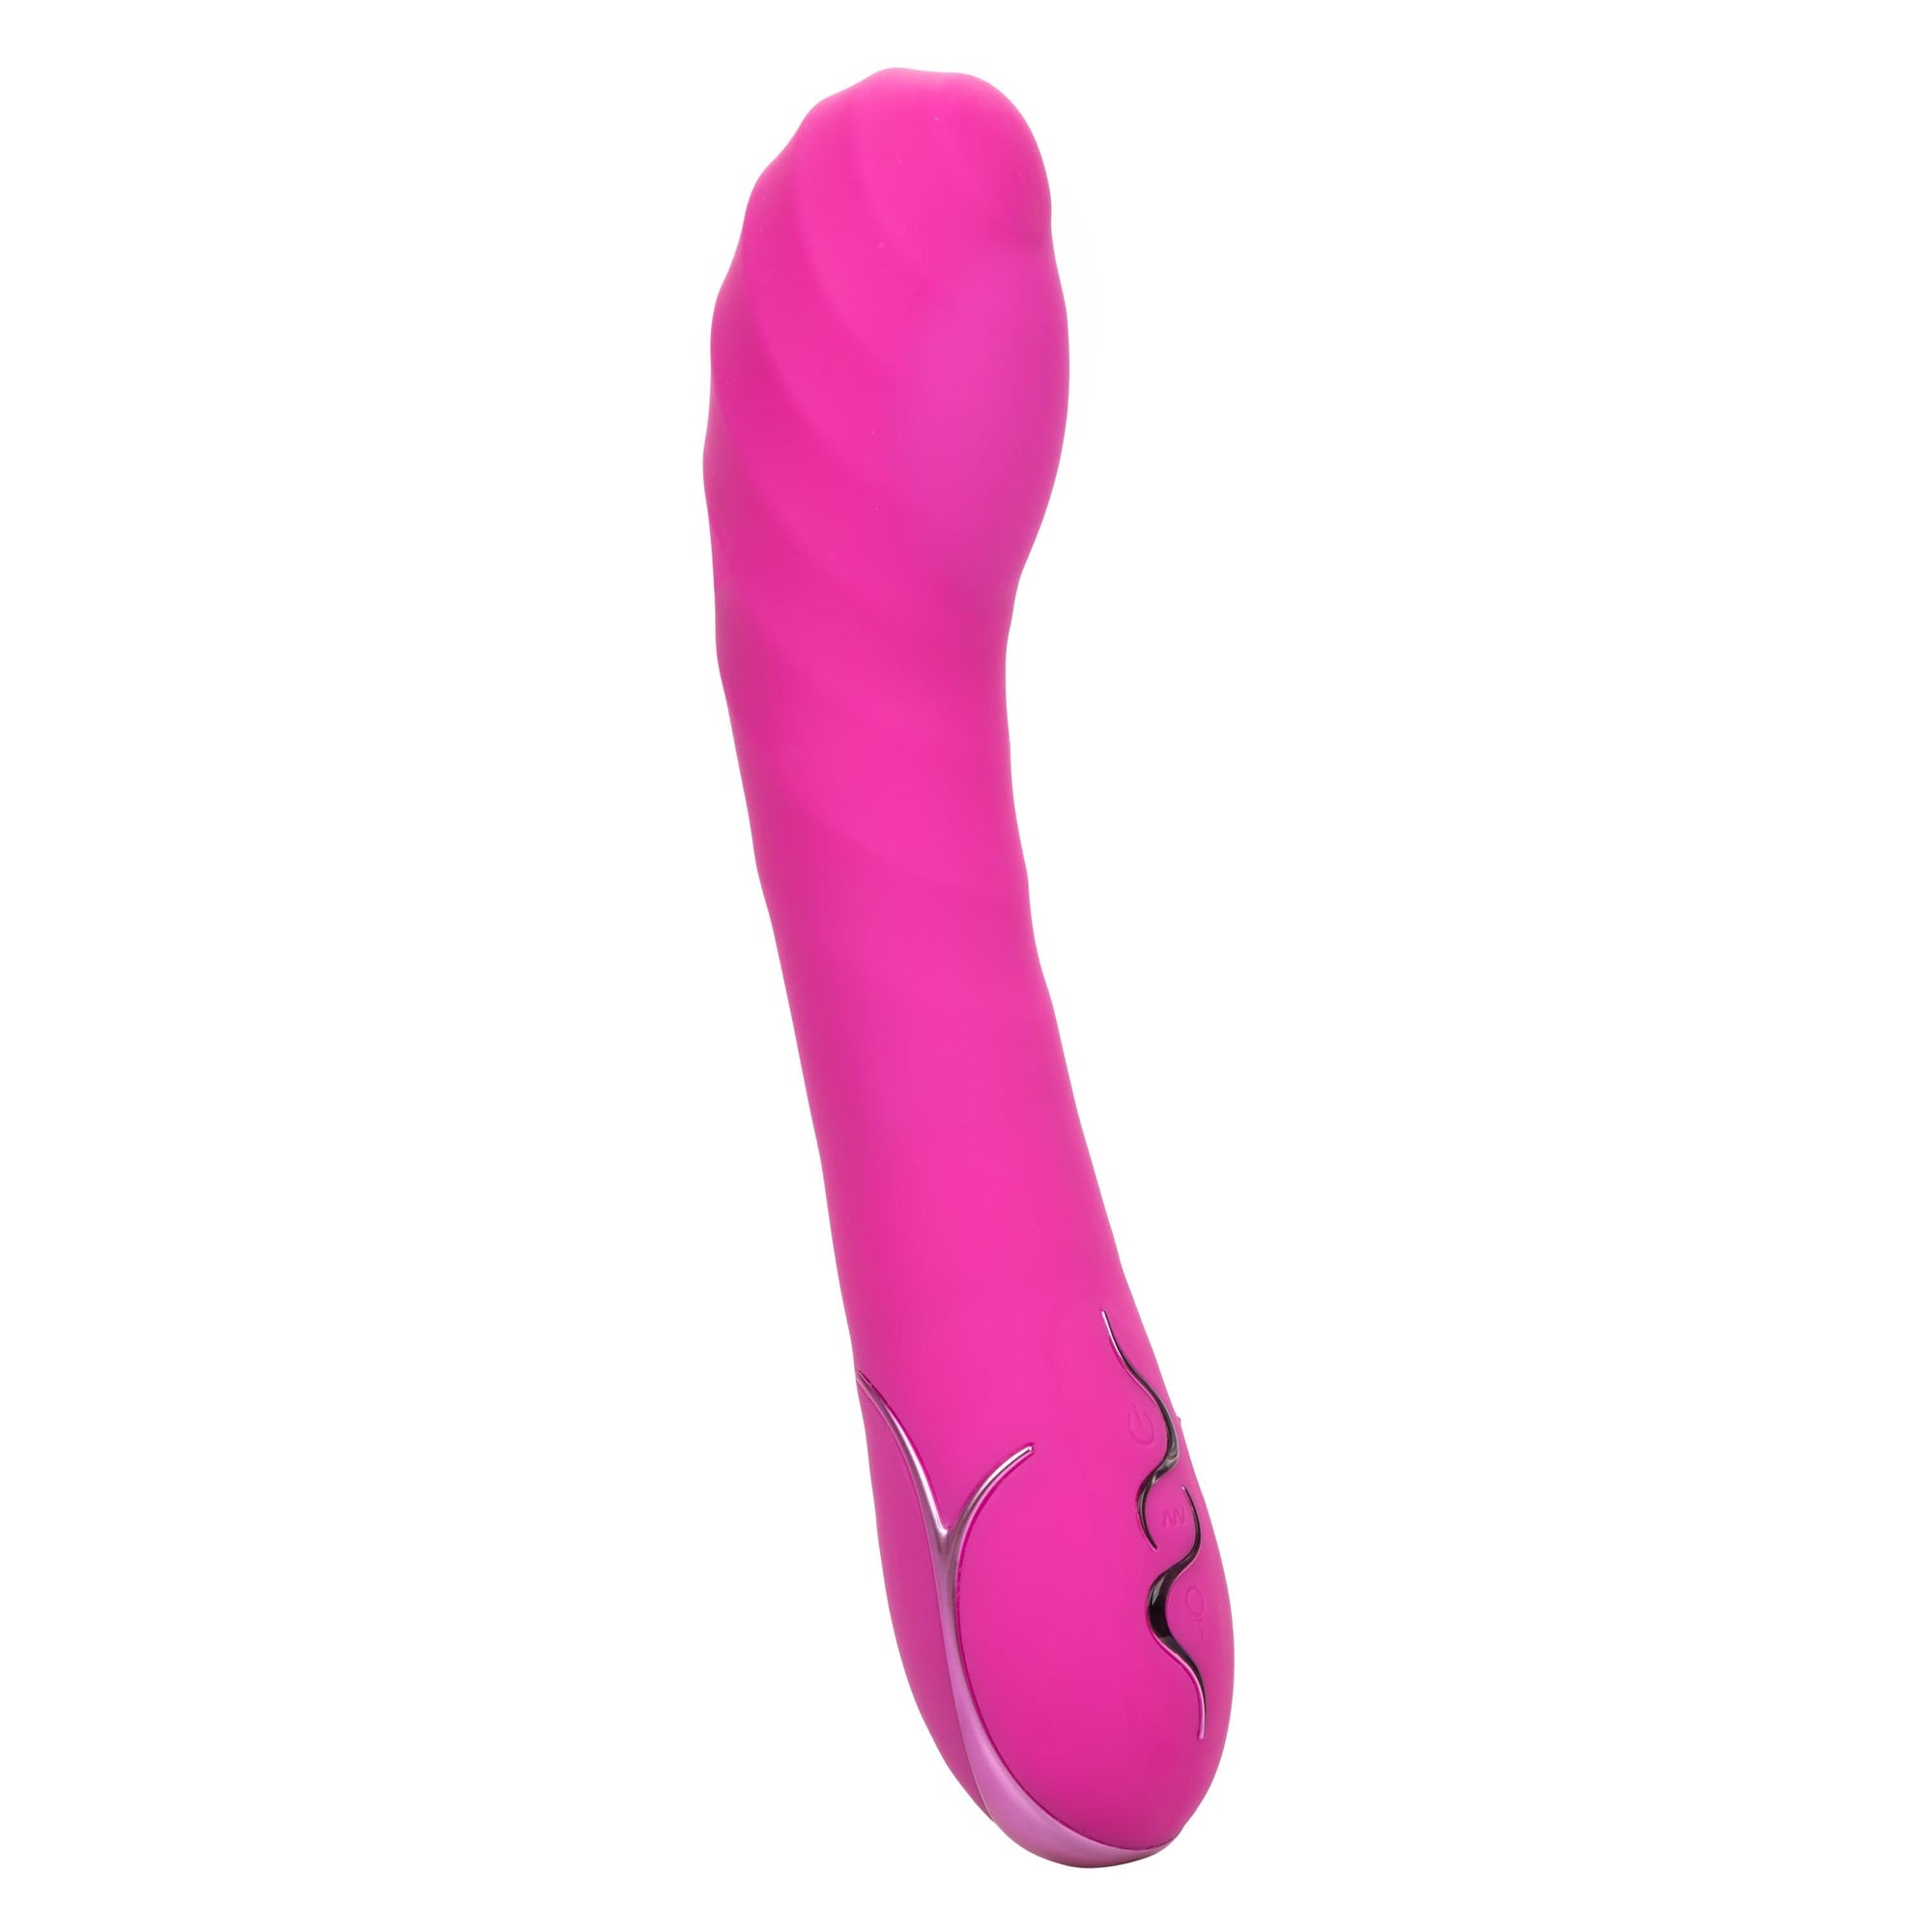 California Exotics - Insatiable G Inflatable G Spot Vibrator (Pink) G Spot Dildo (Vibration) Rechargeable 716770097132 CherryAffairs